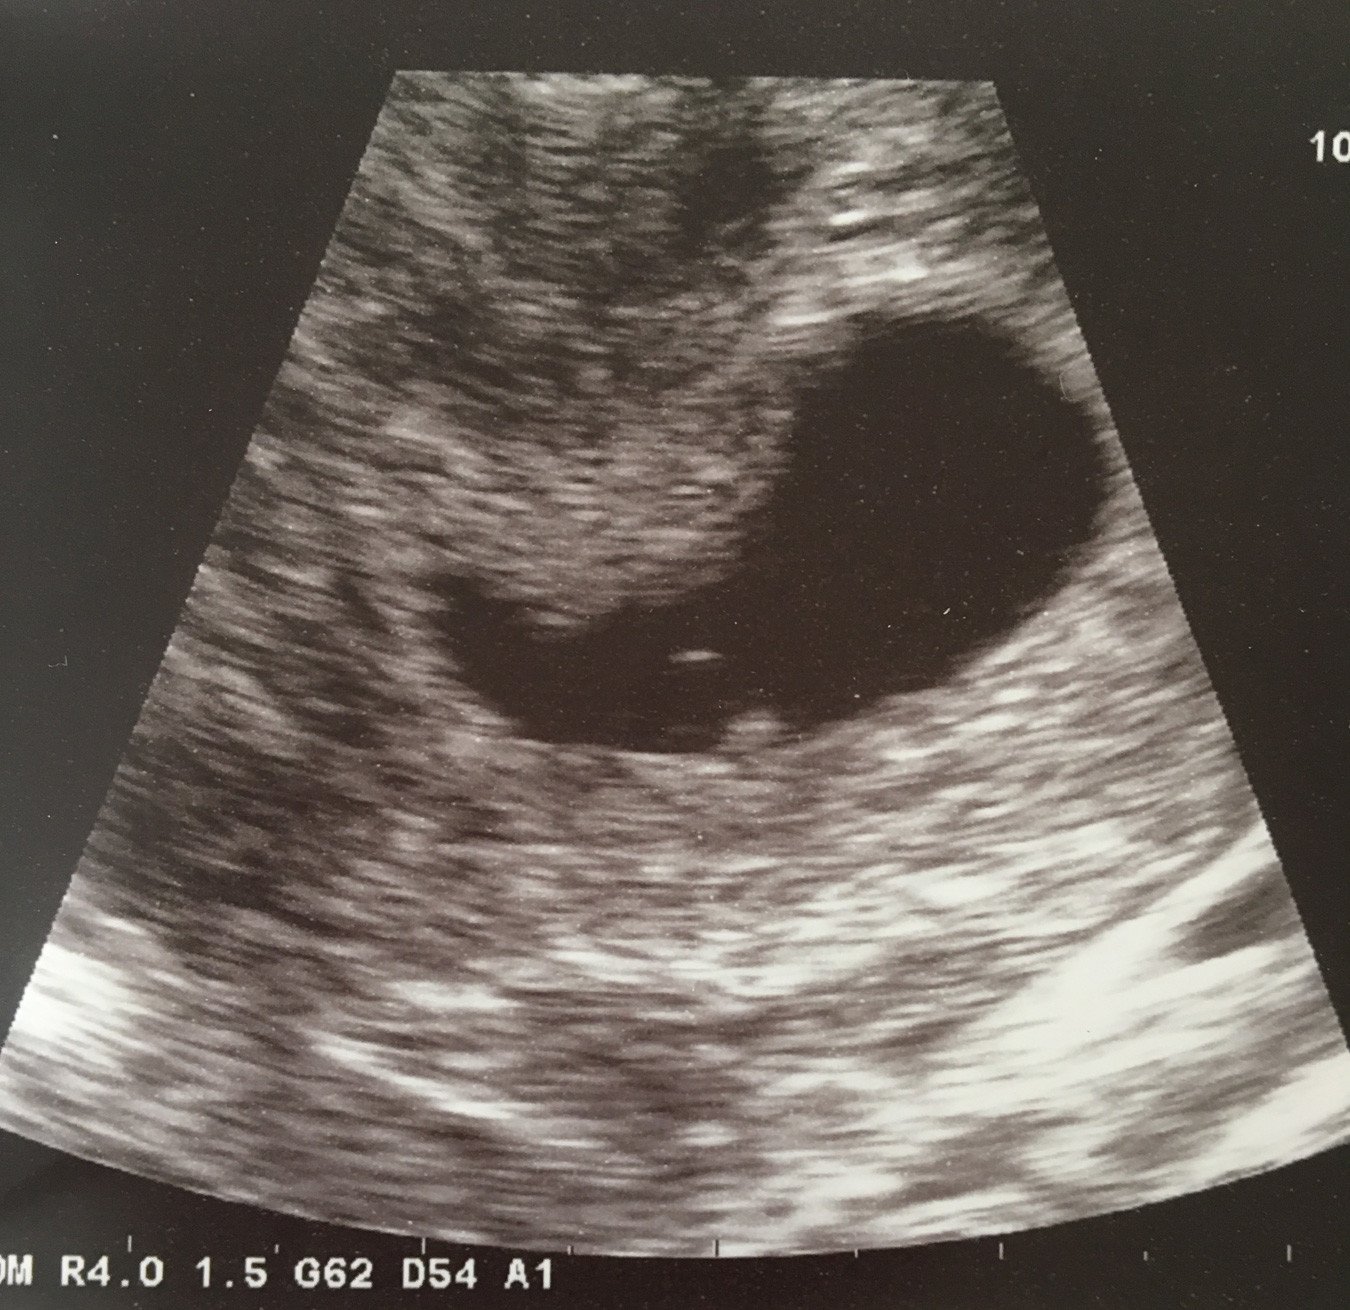 5 week ultrasound